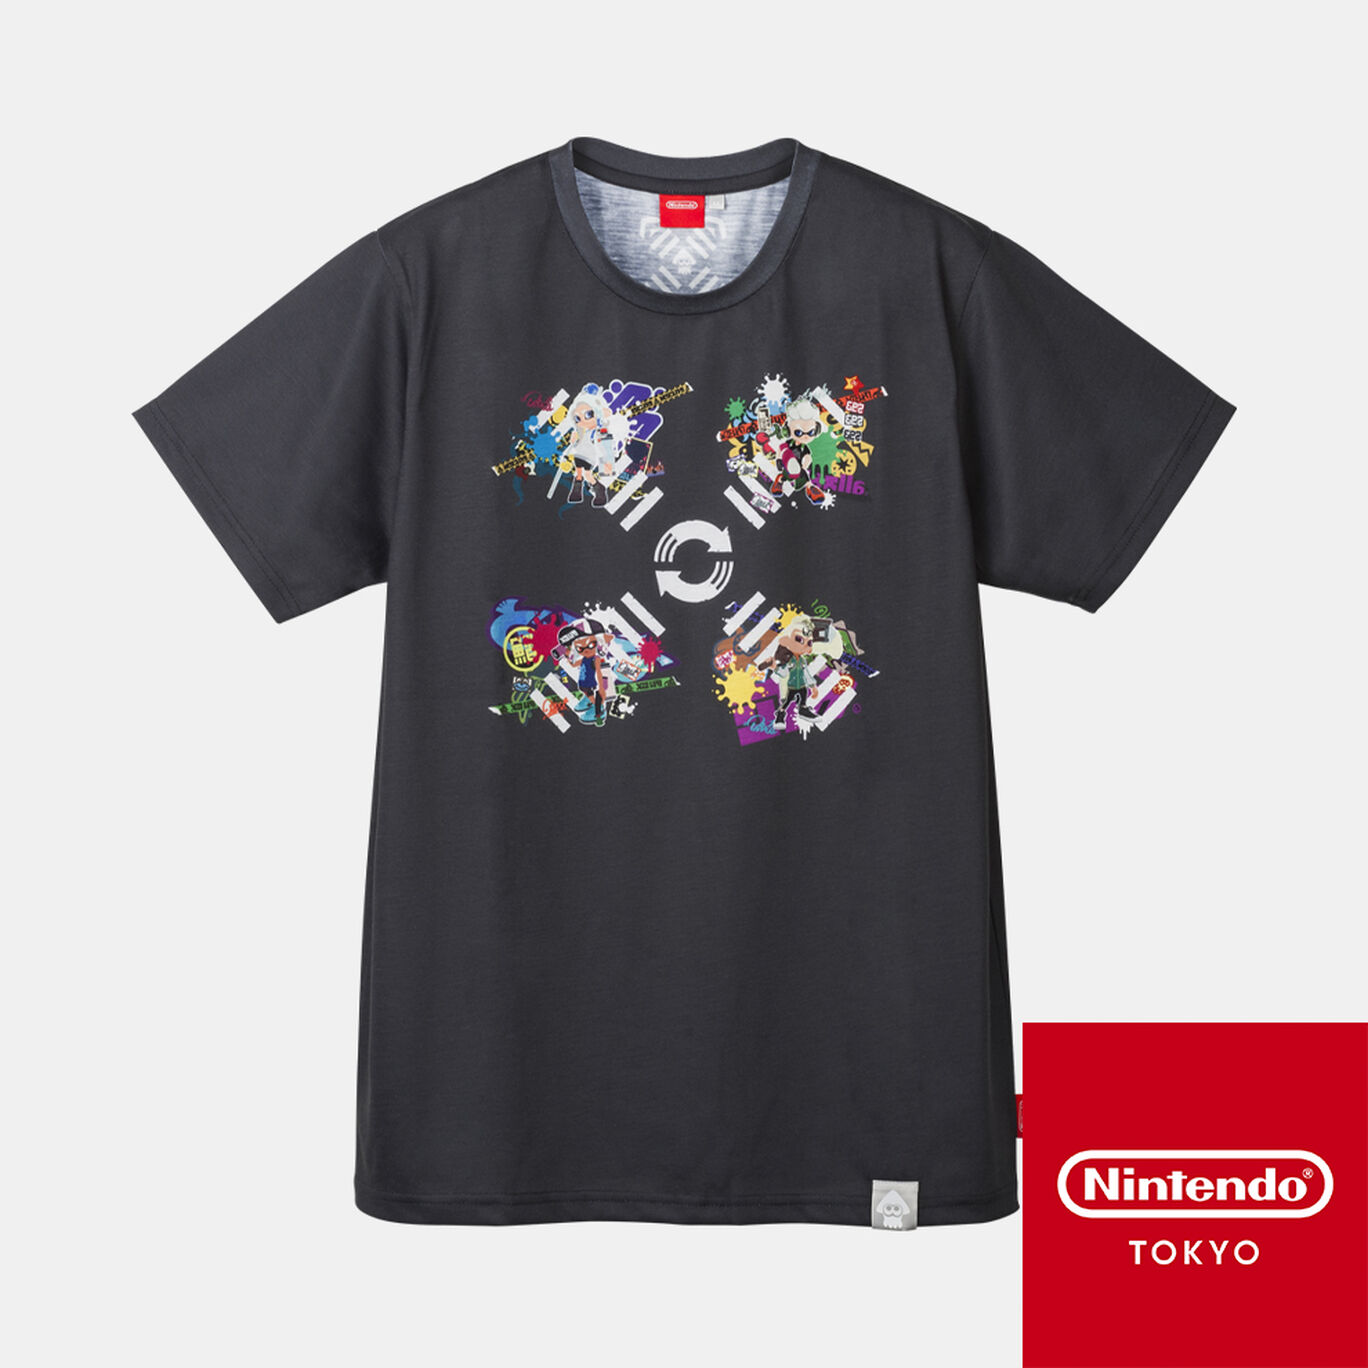 Tシャツ CROSSING SPLATOON A L【Nintendo TOKYO/OSAKA取り扱い商品】